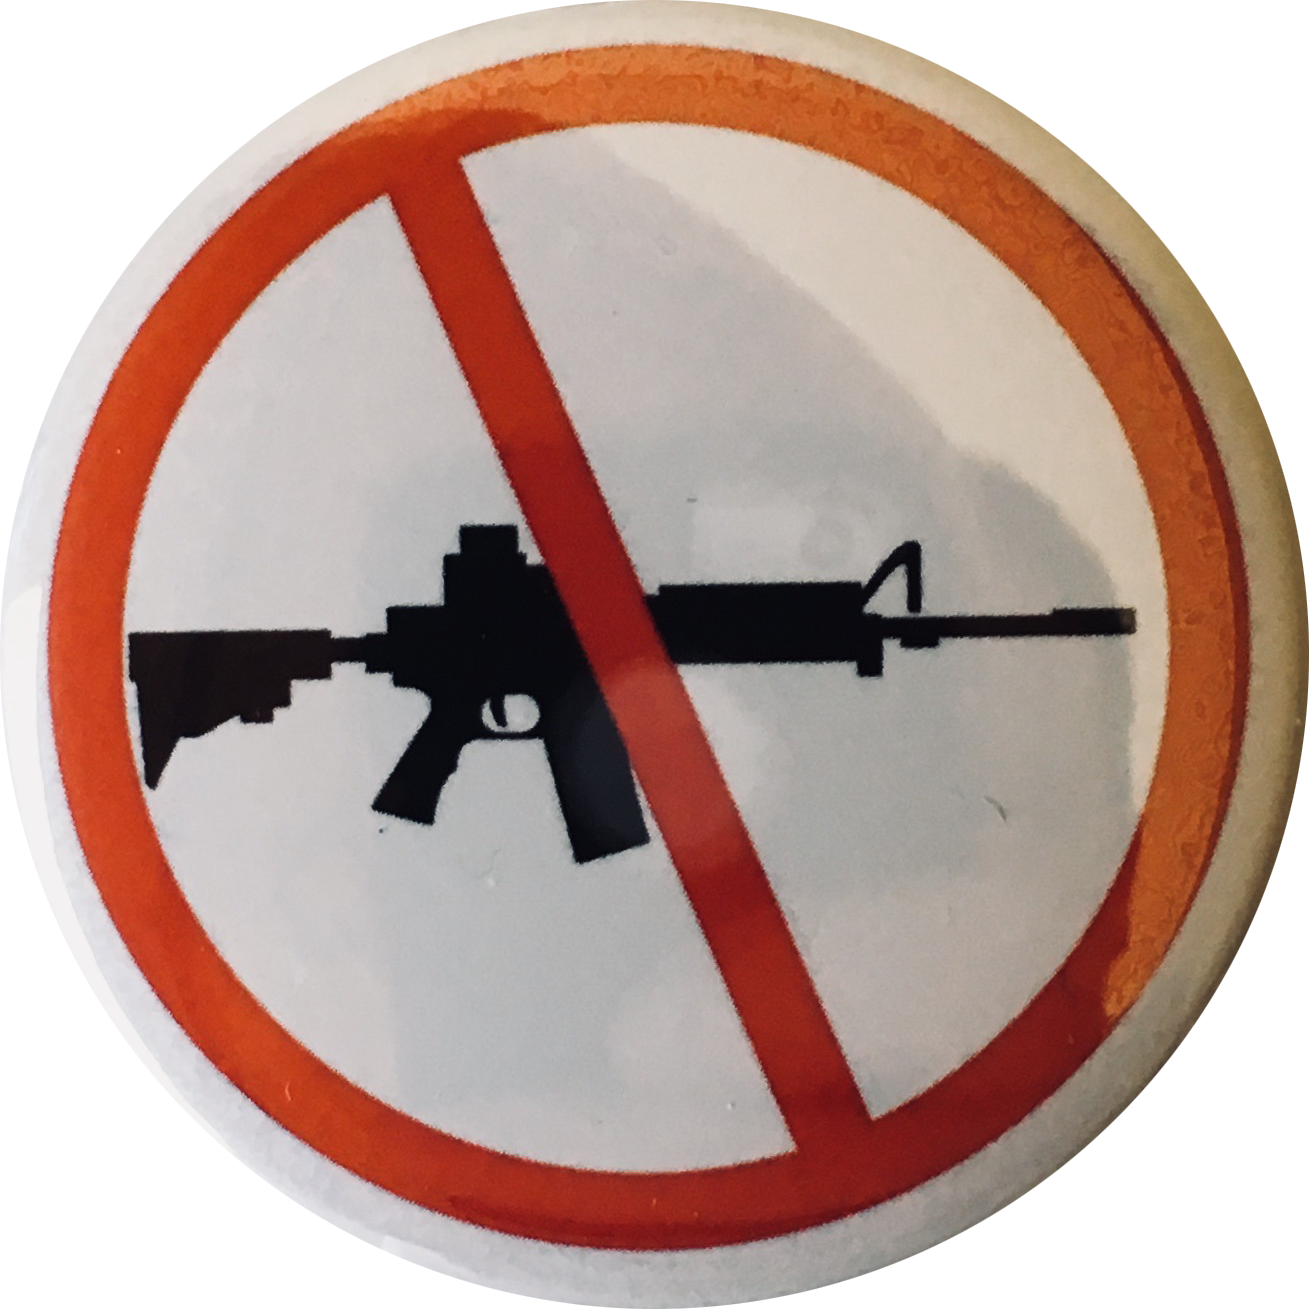 Stop Gun Violence pins - Gun Reform / Gun Control buttons - set of 8 (2.25 inch) Без бренда - фотография #9